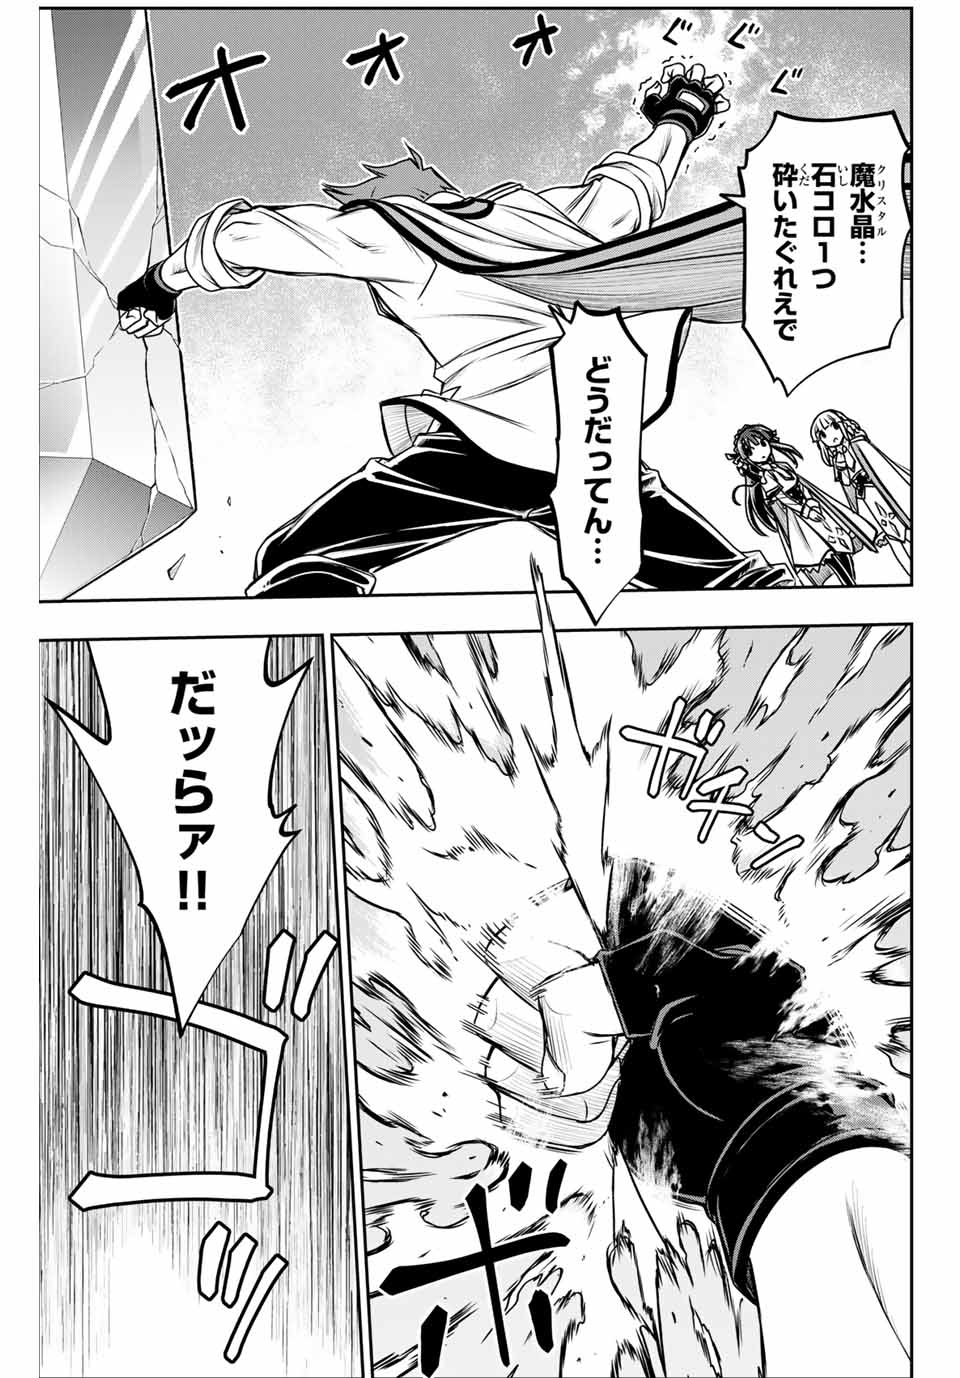 Nengan no Akuyaku Reijou (Last Boss) no Karada wo Teniiretazo!  - Chapter 23.5 - Page 7